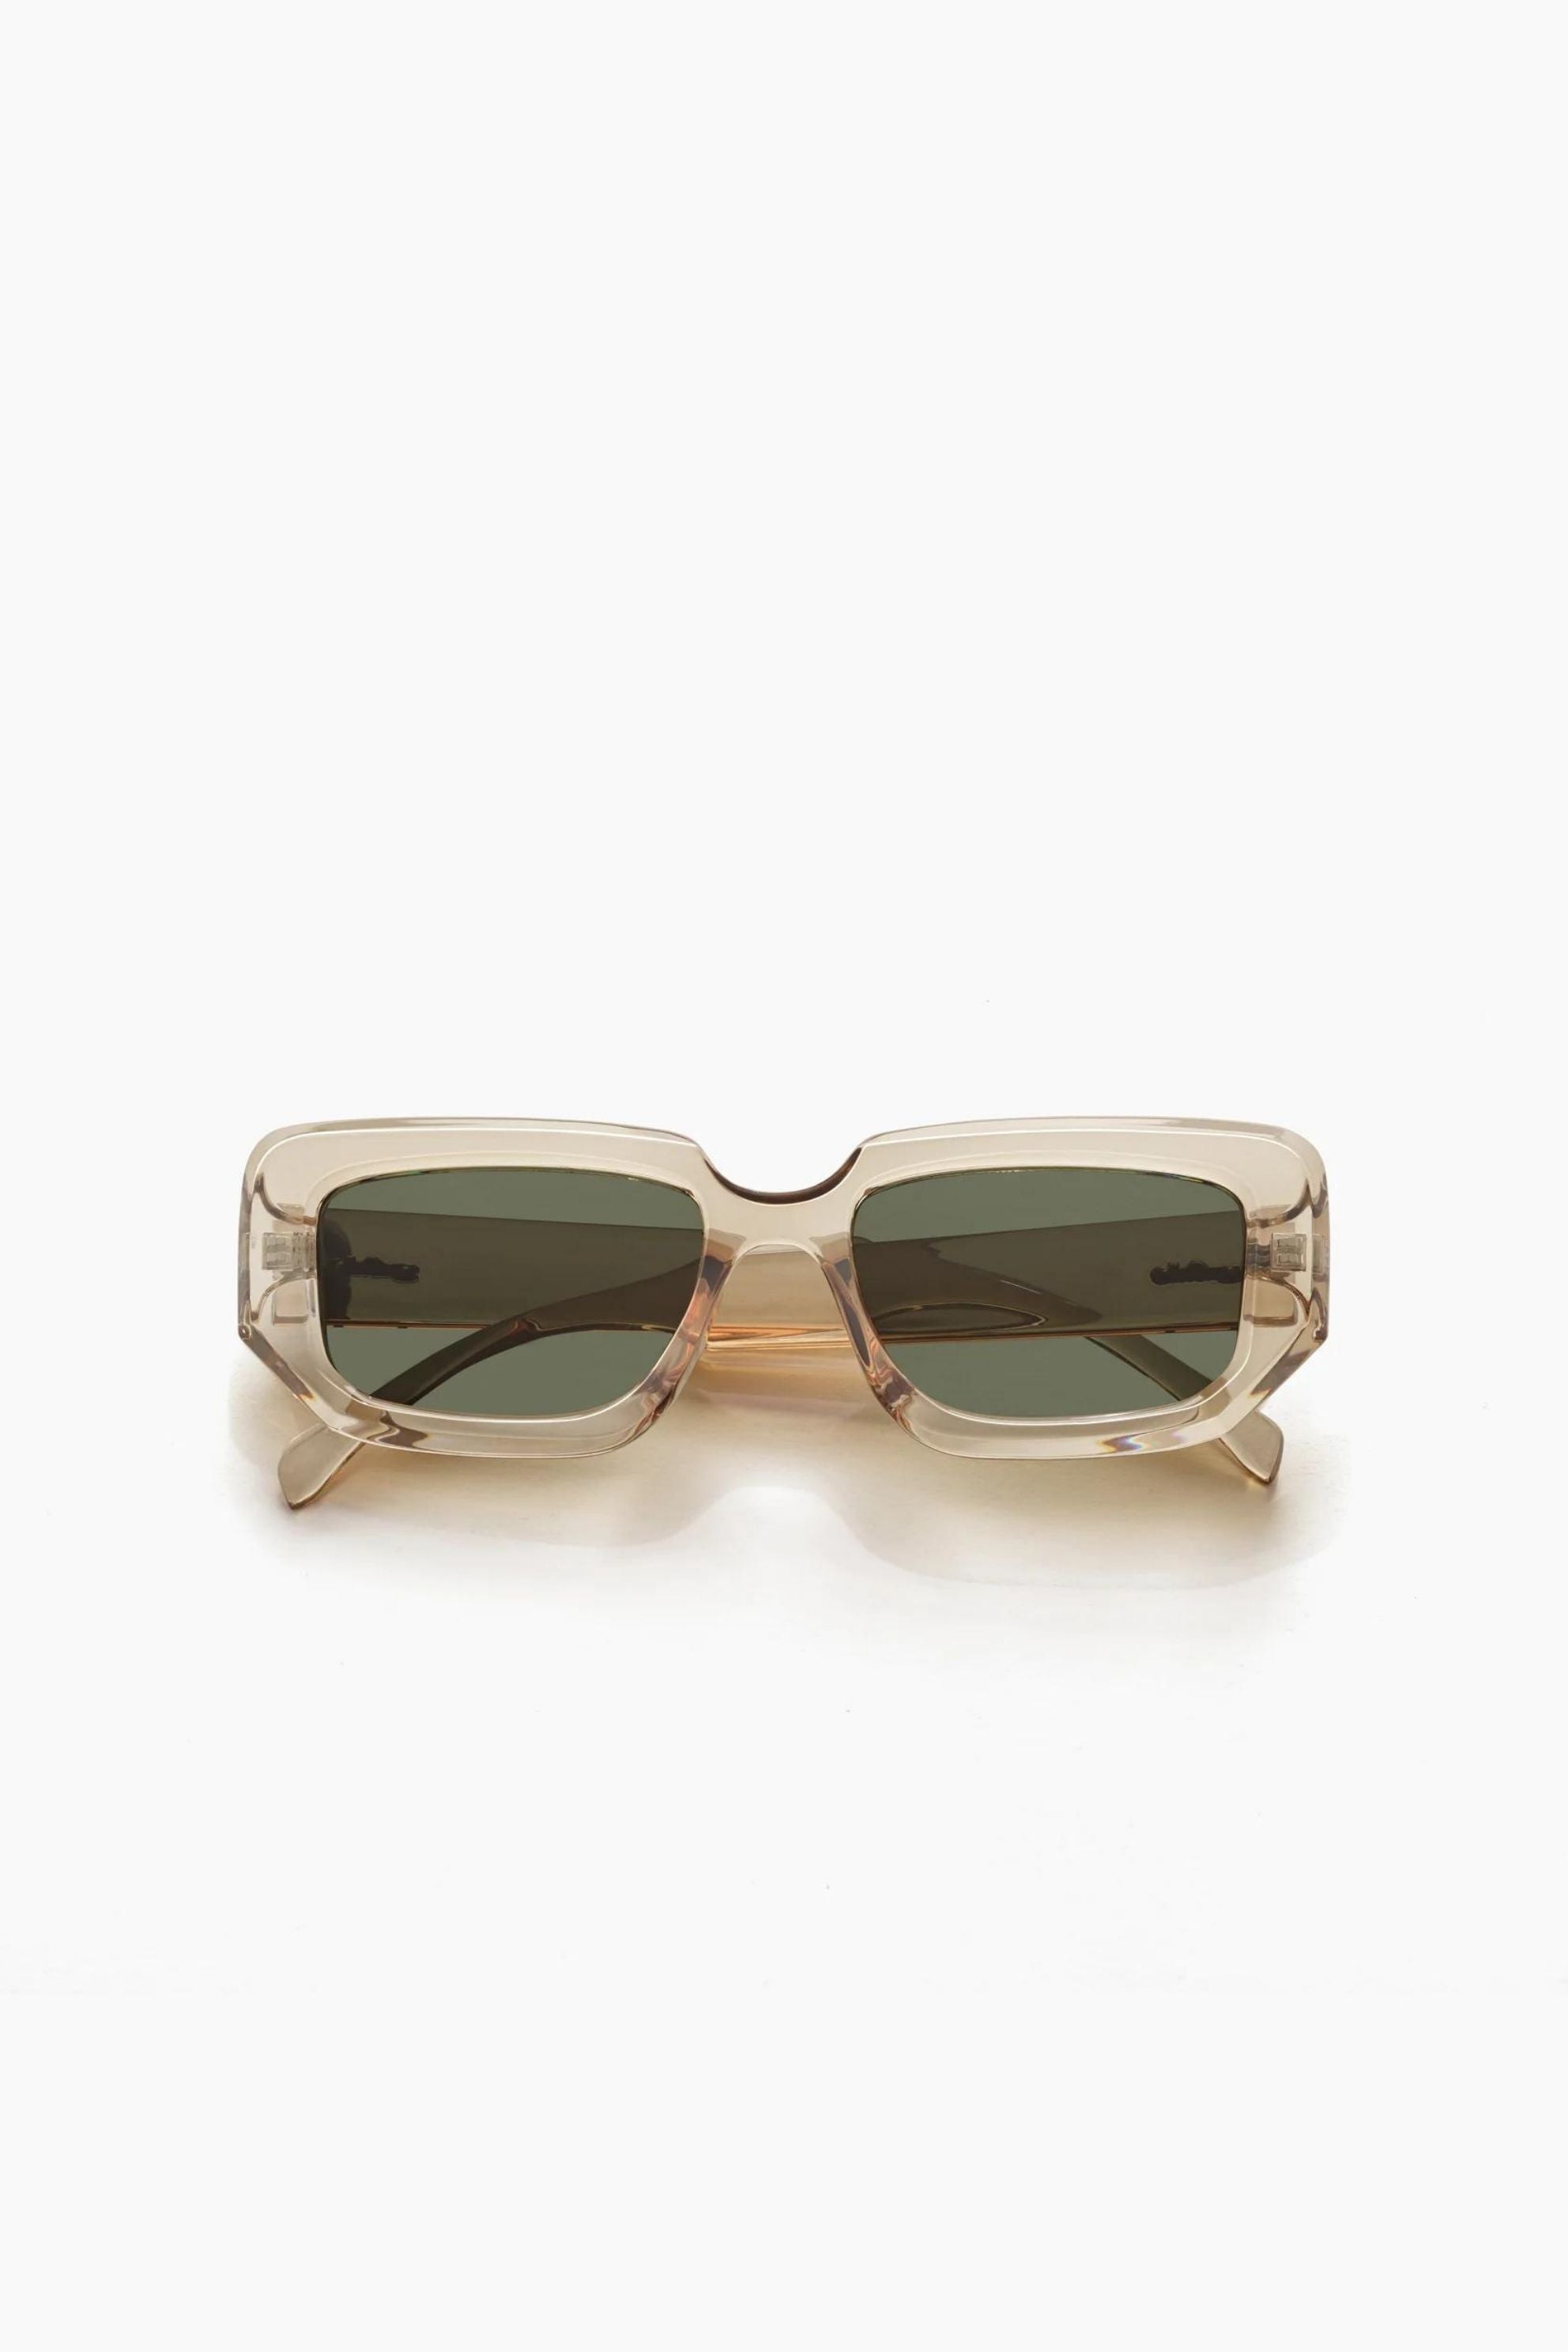 Banks Sunglasses Hazel / Moss